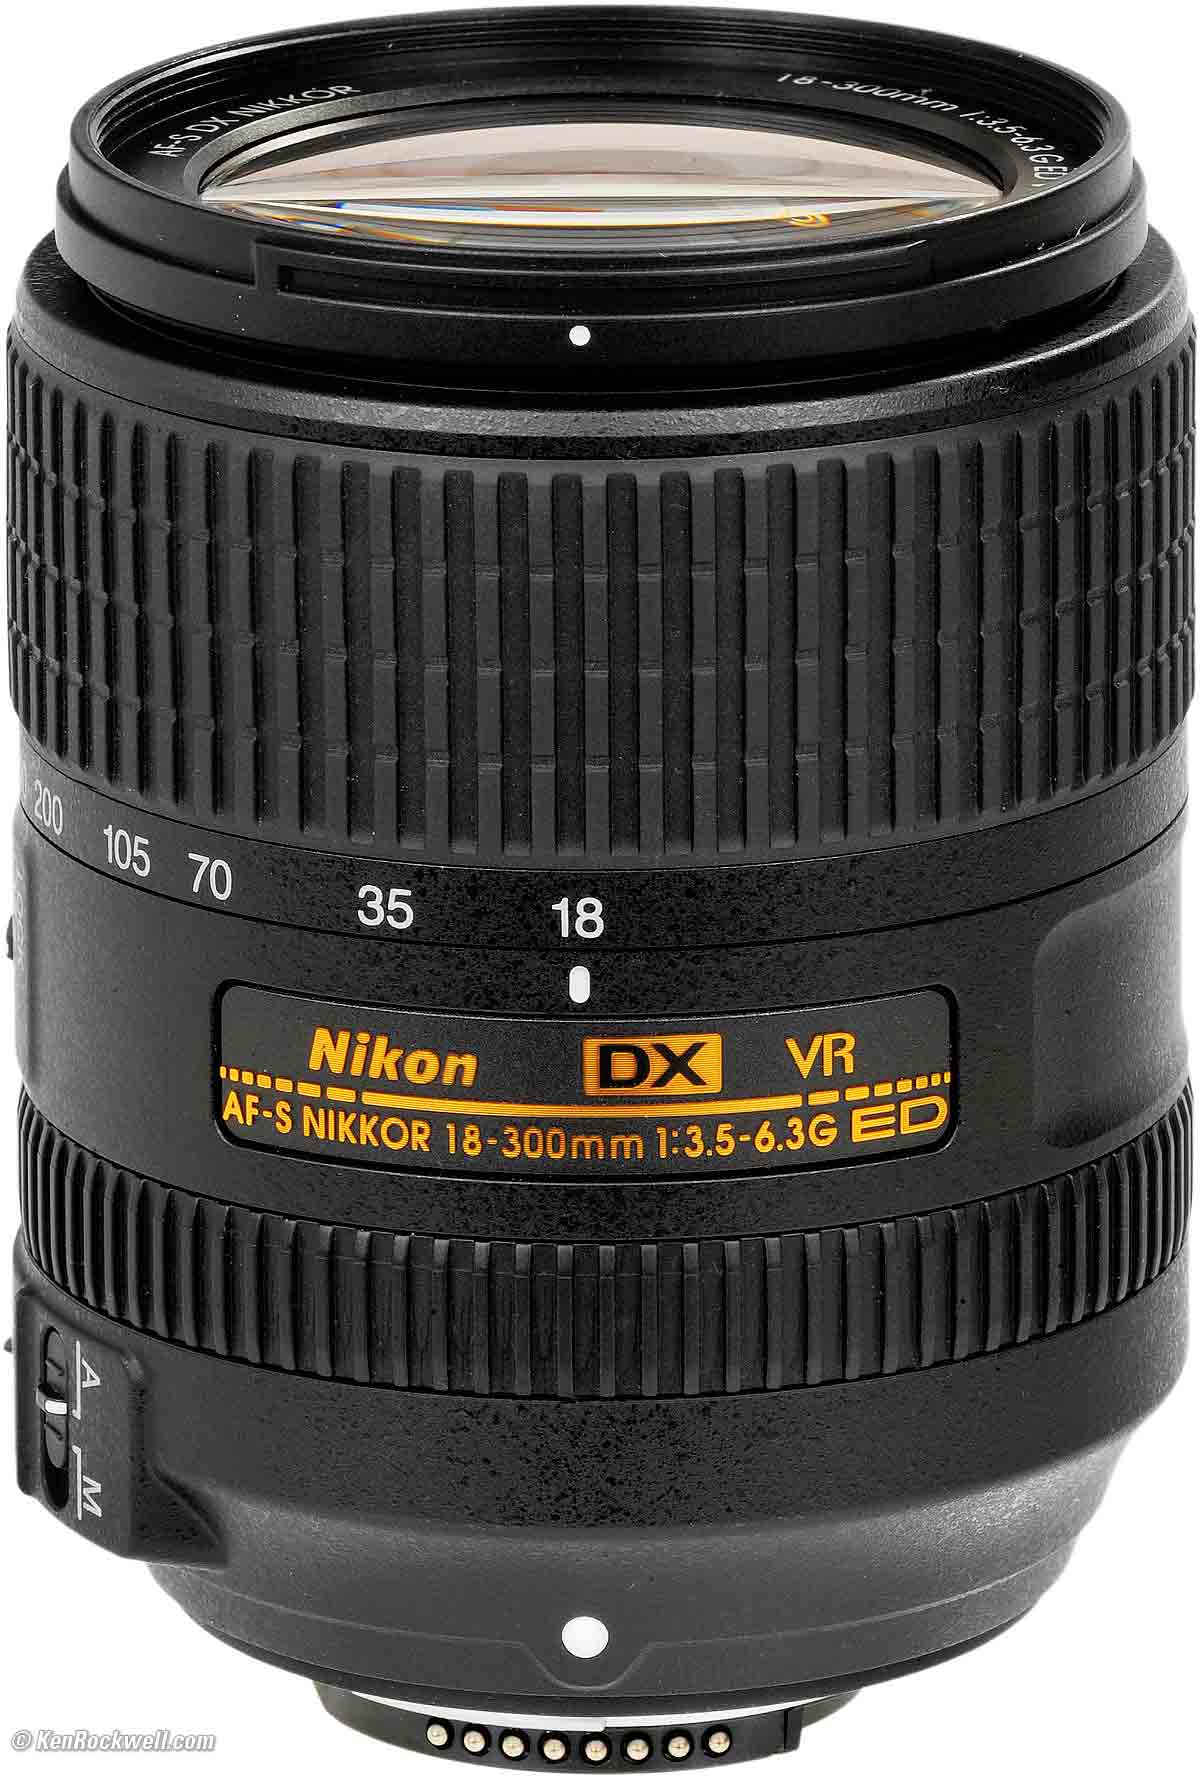 Long Universal Opiate Nikon 18-300mm VR Review